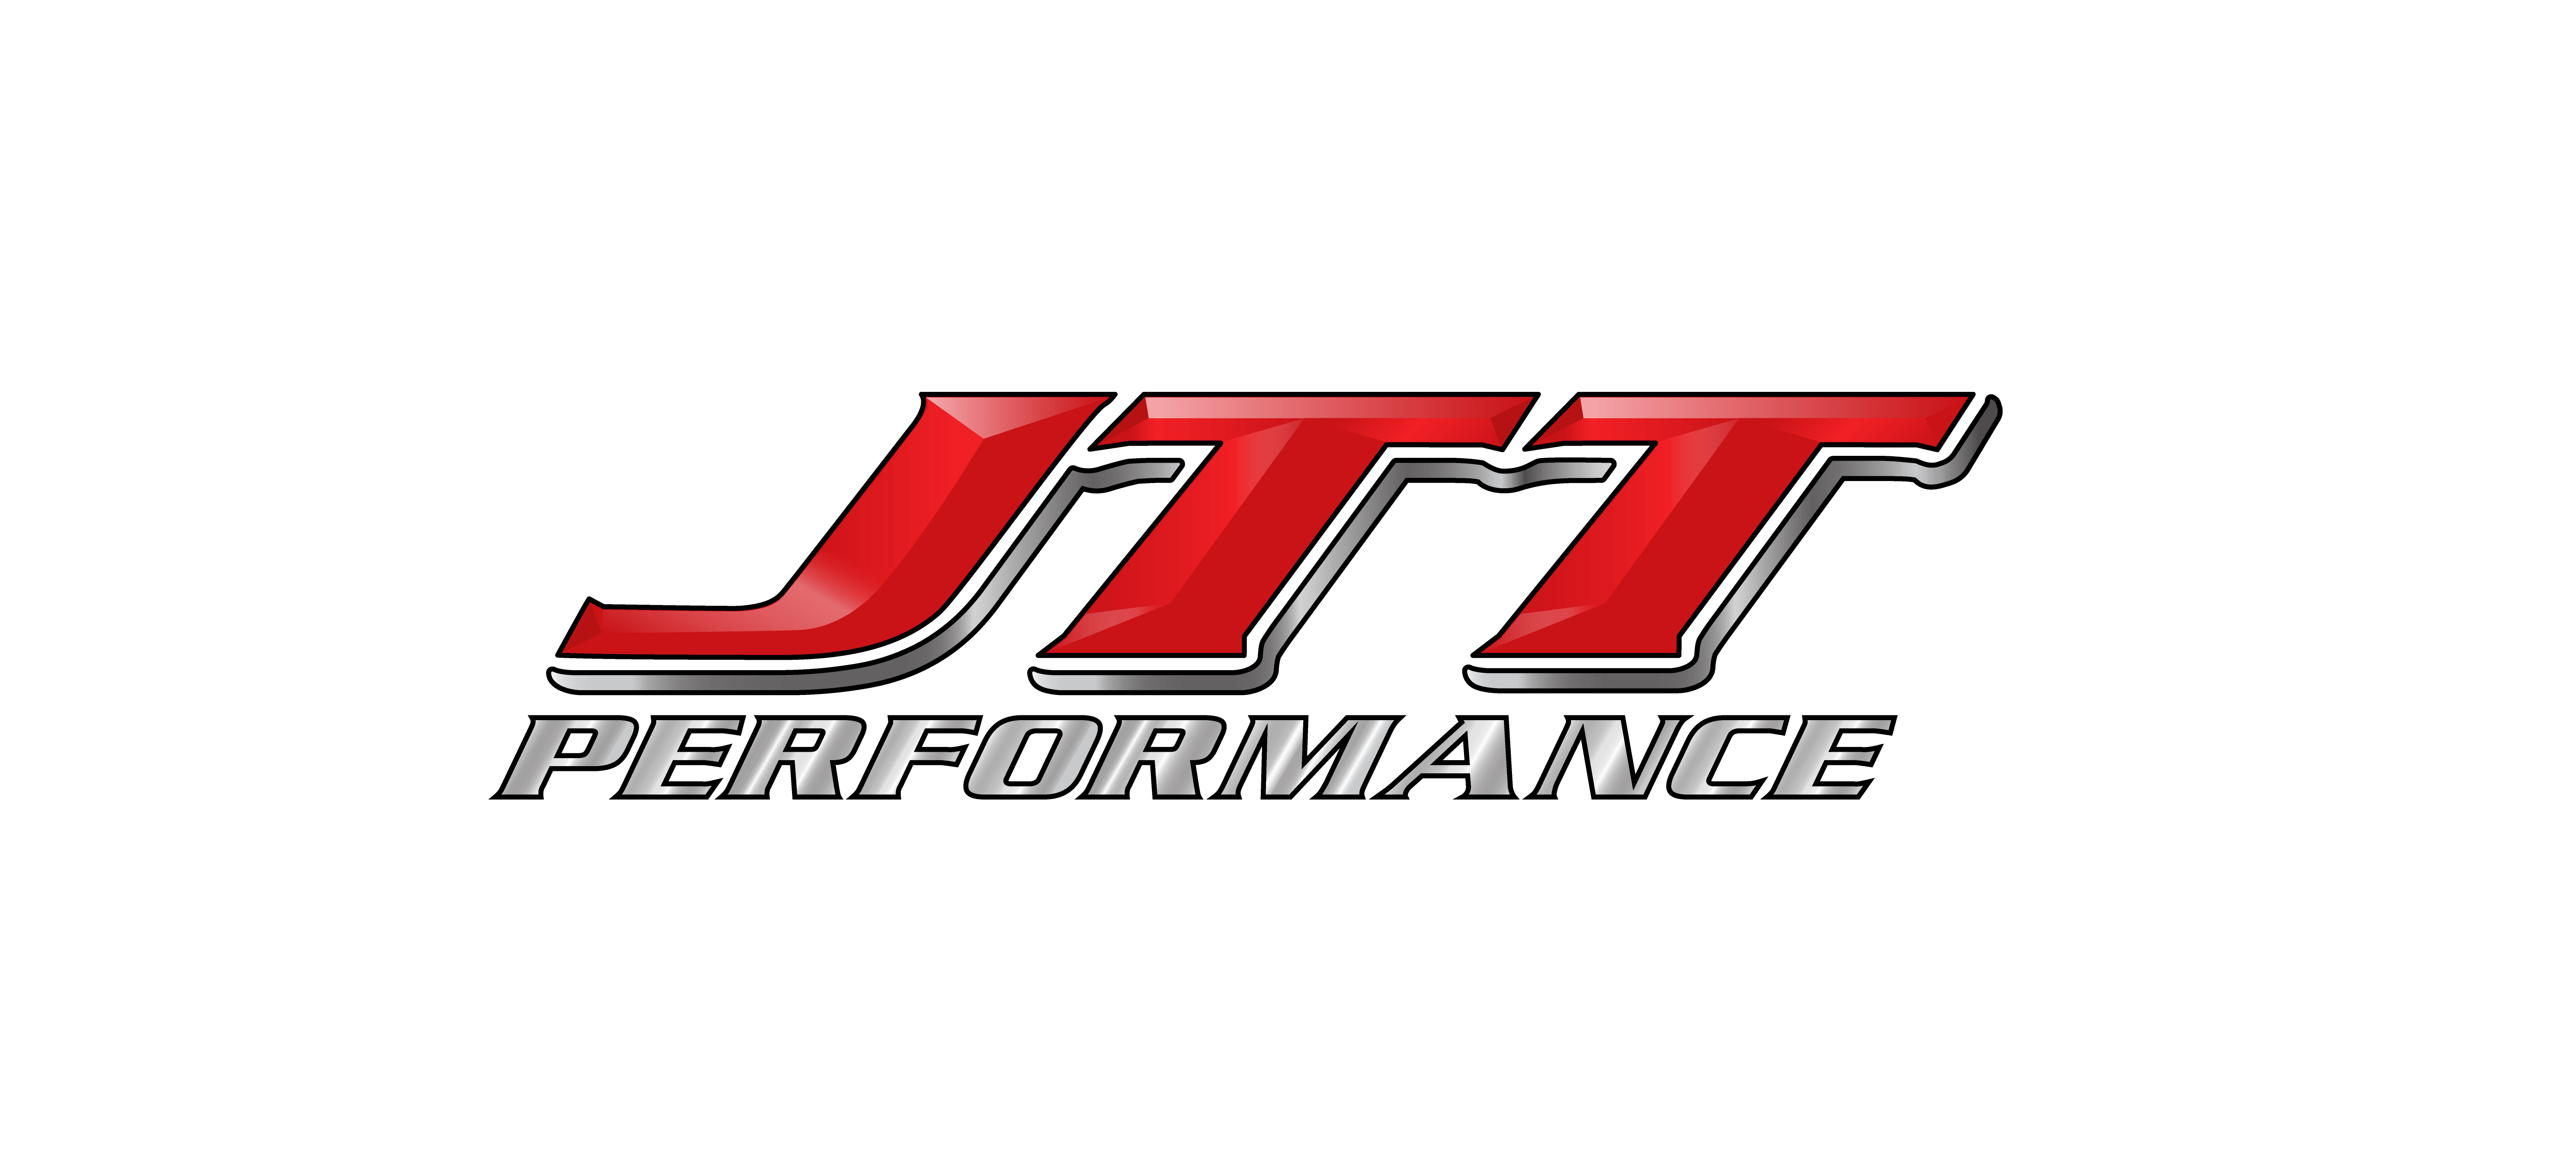 JTT Logo - JTT Performance Logo 1 & 2 - Album on Imgur